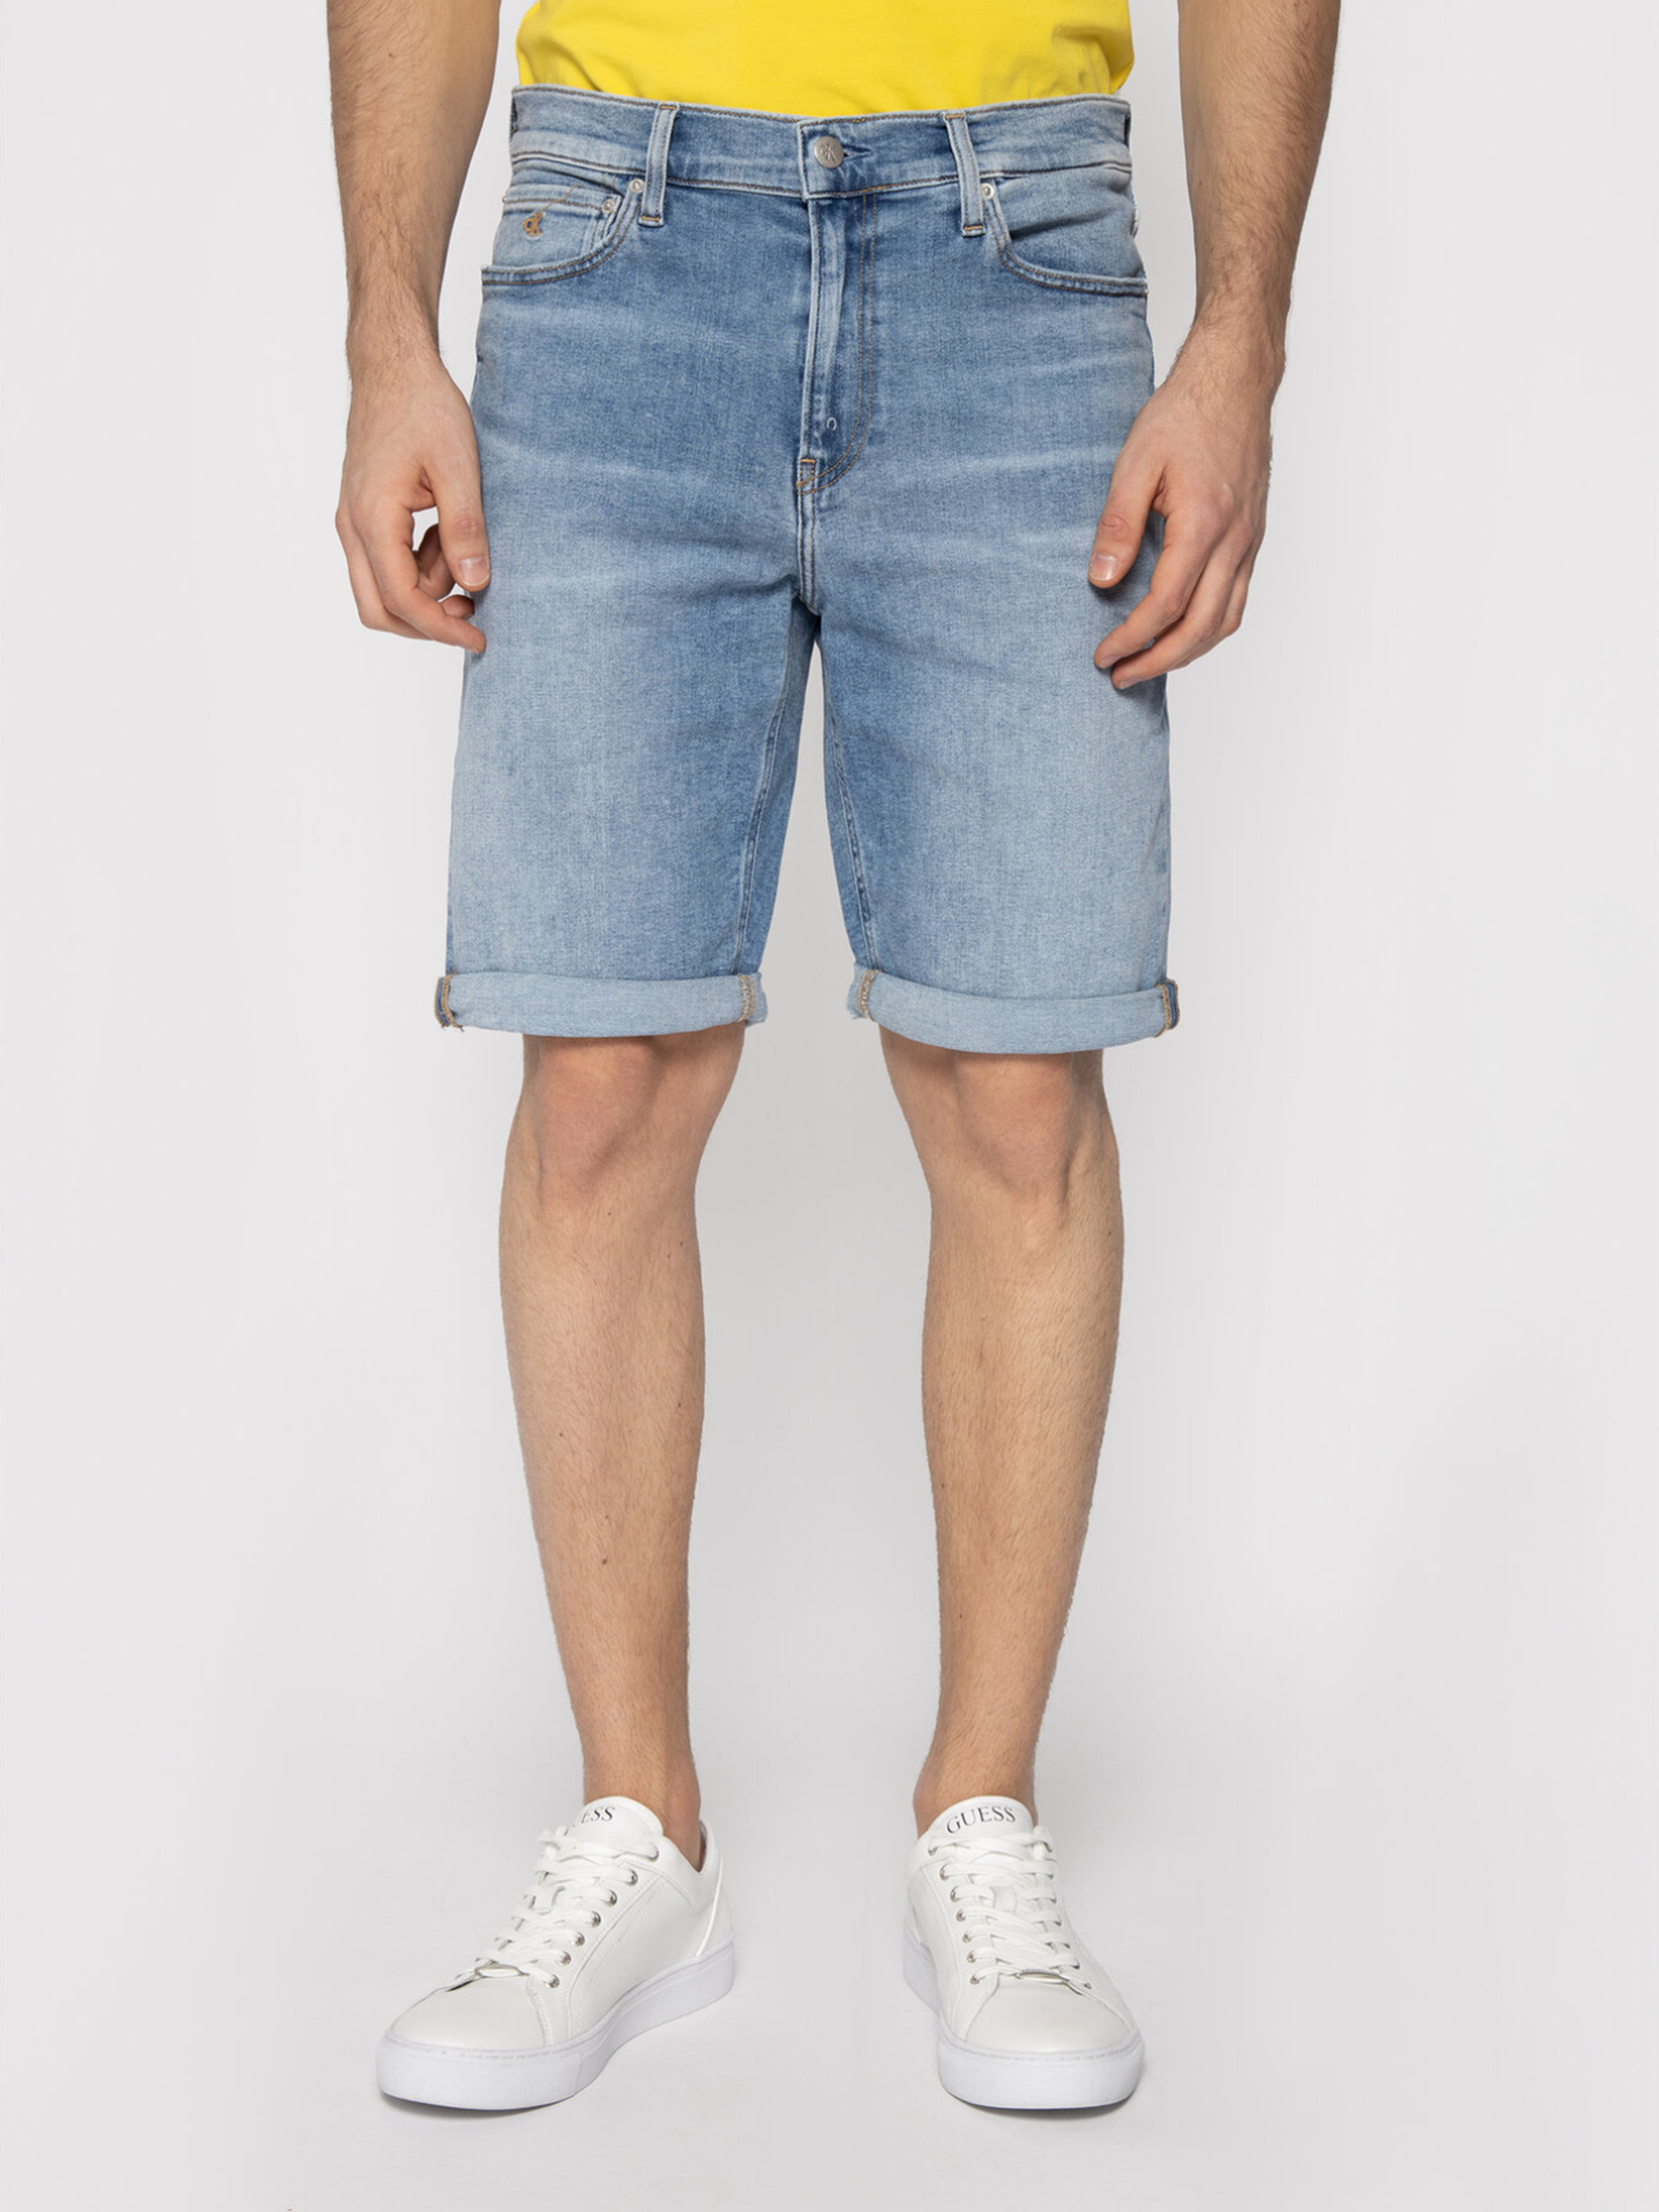 Calvin Klein pánské džínové modré šortky - 32/NI (1AA)